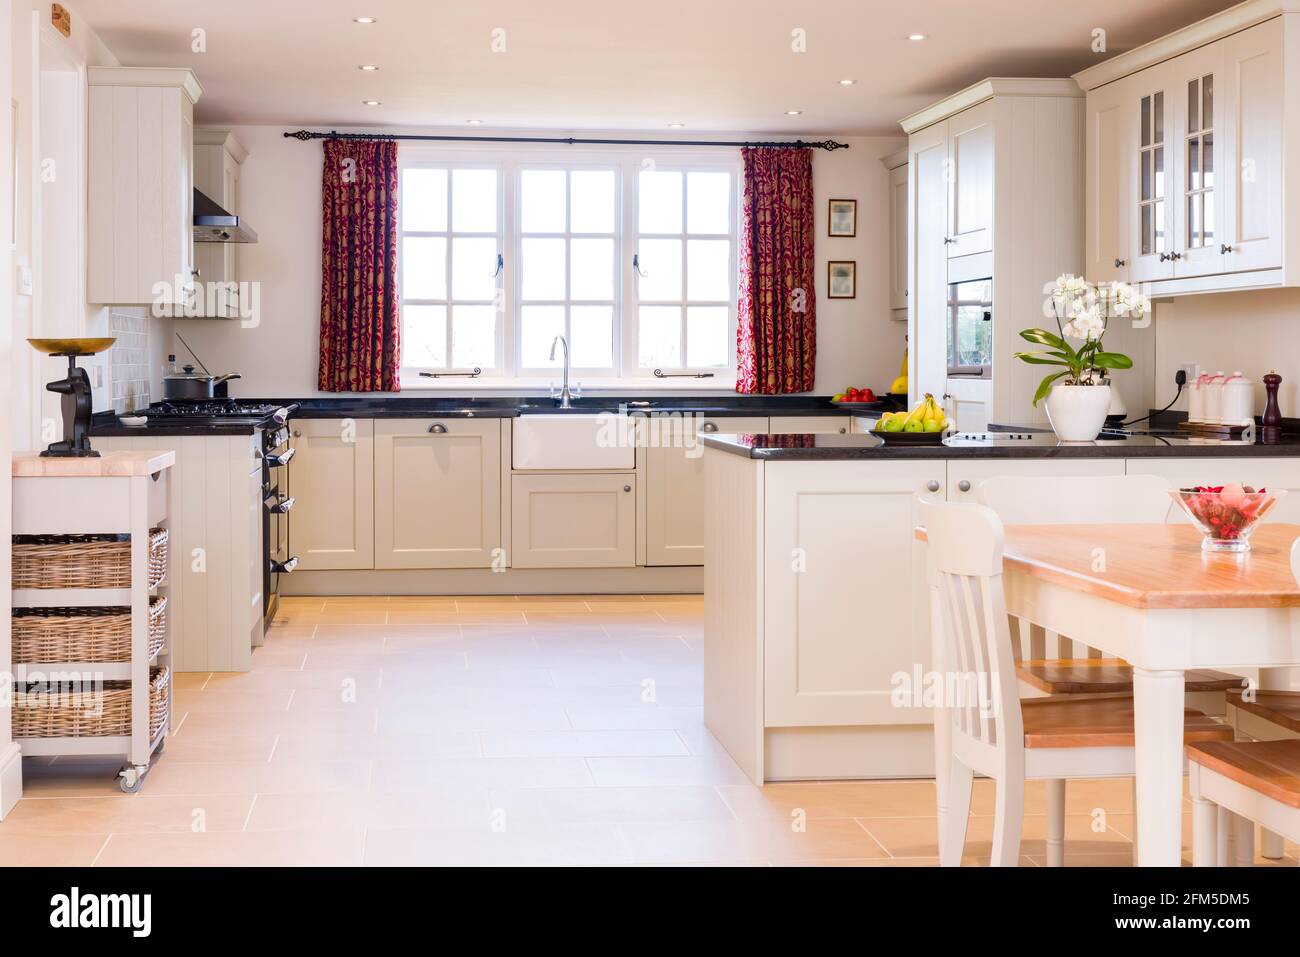 Painted wood shaker style kitchen interior design, UK luxury kitchens Stock Photo